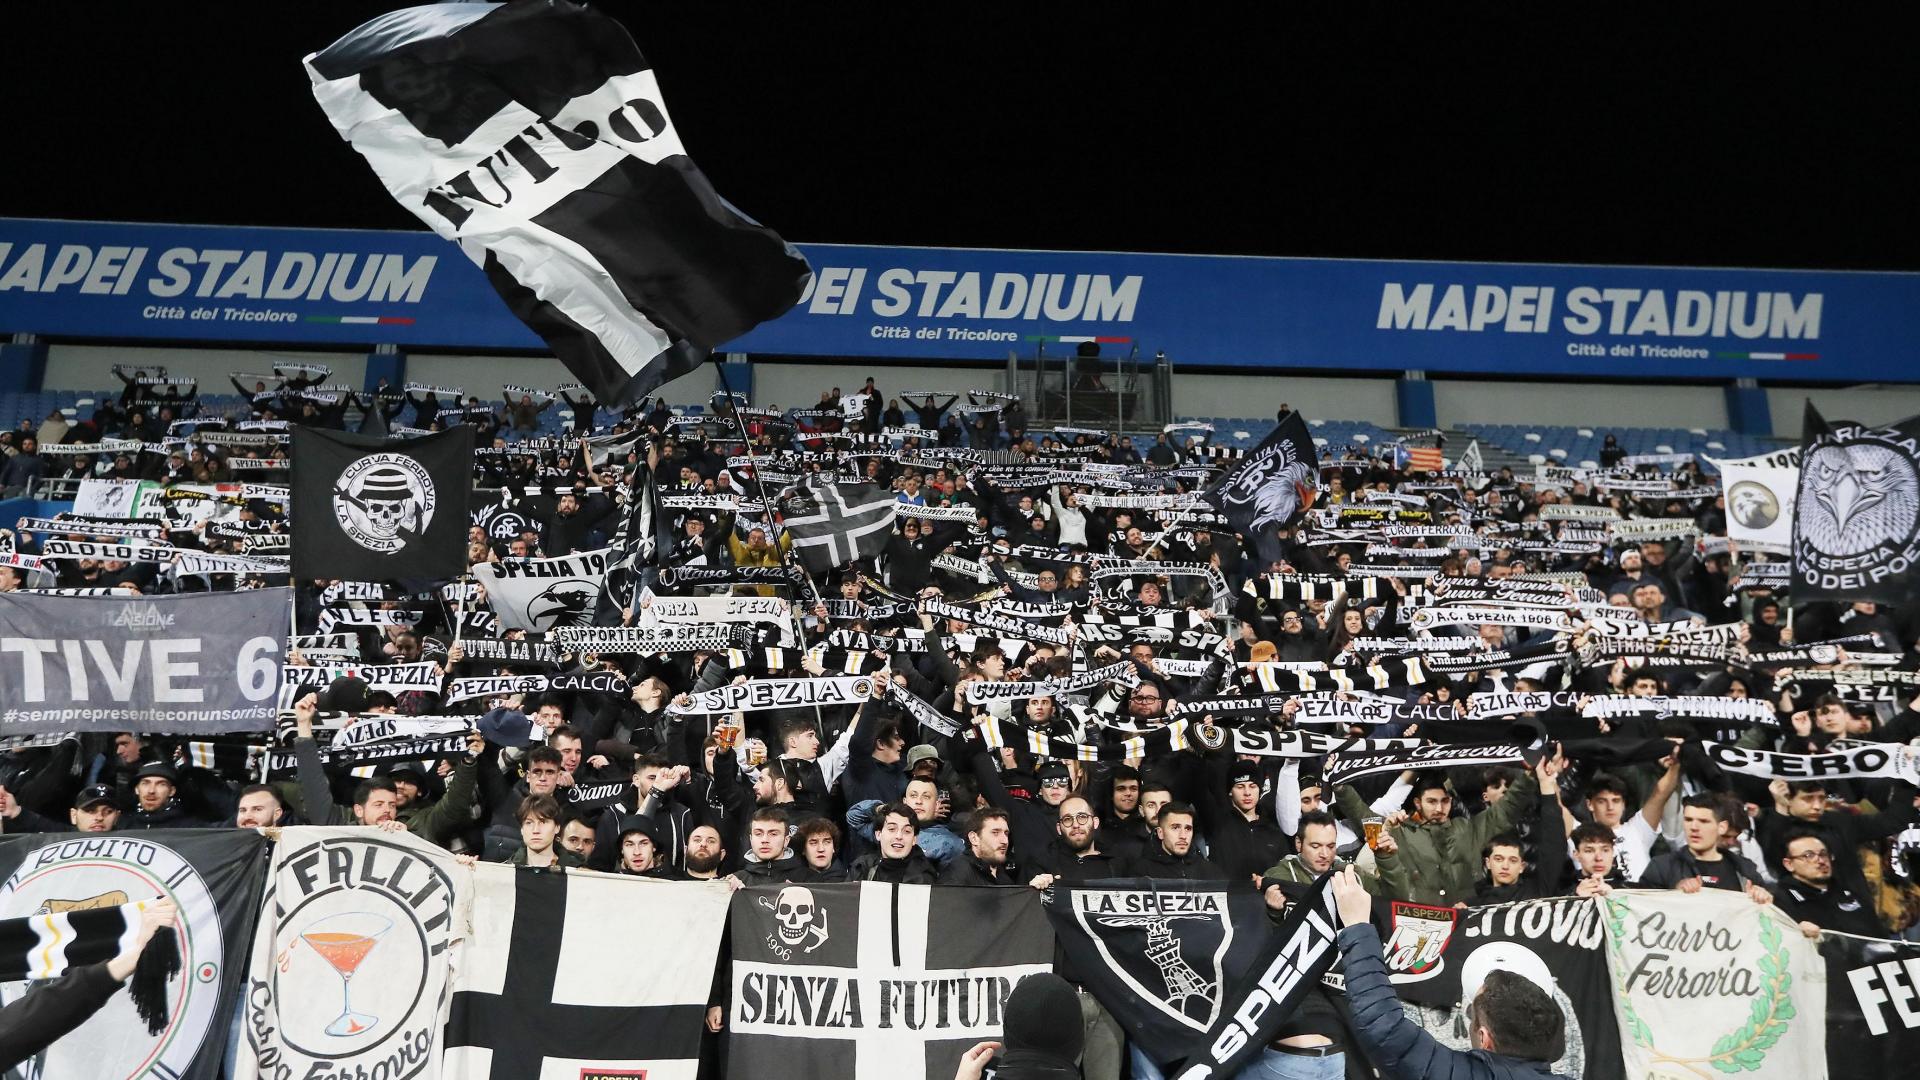 Spezia-Hellas Verona: Sunday, June 11 at the "Mapei Stadium"